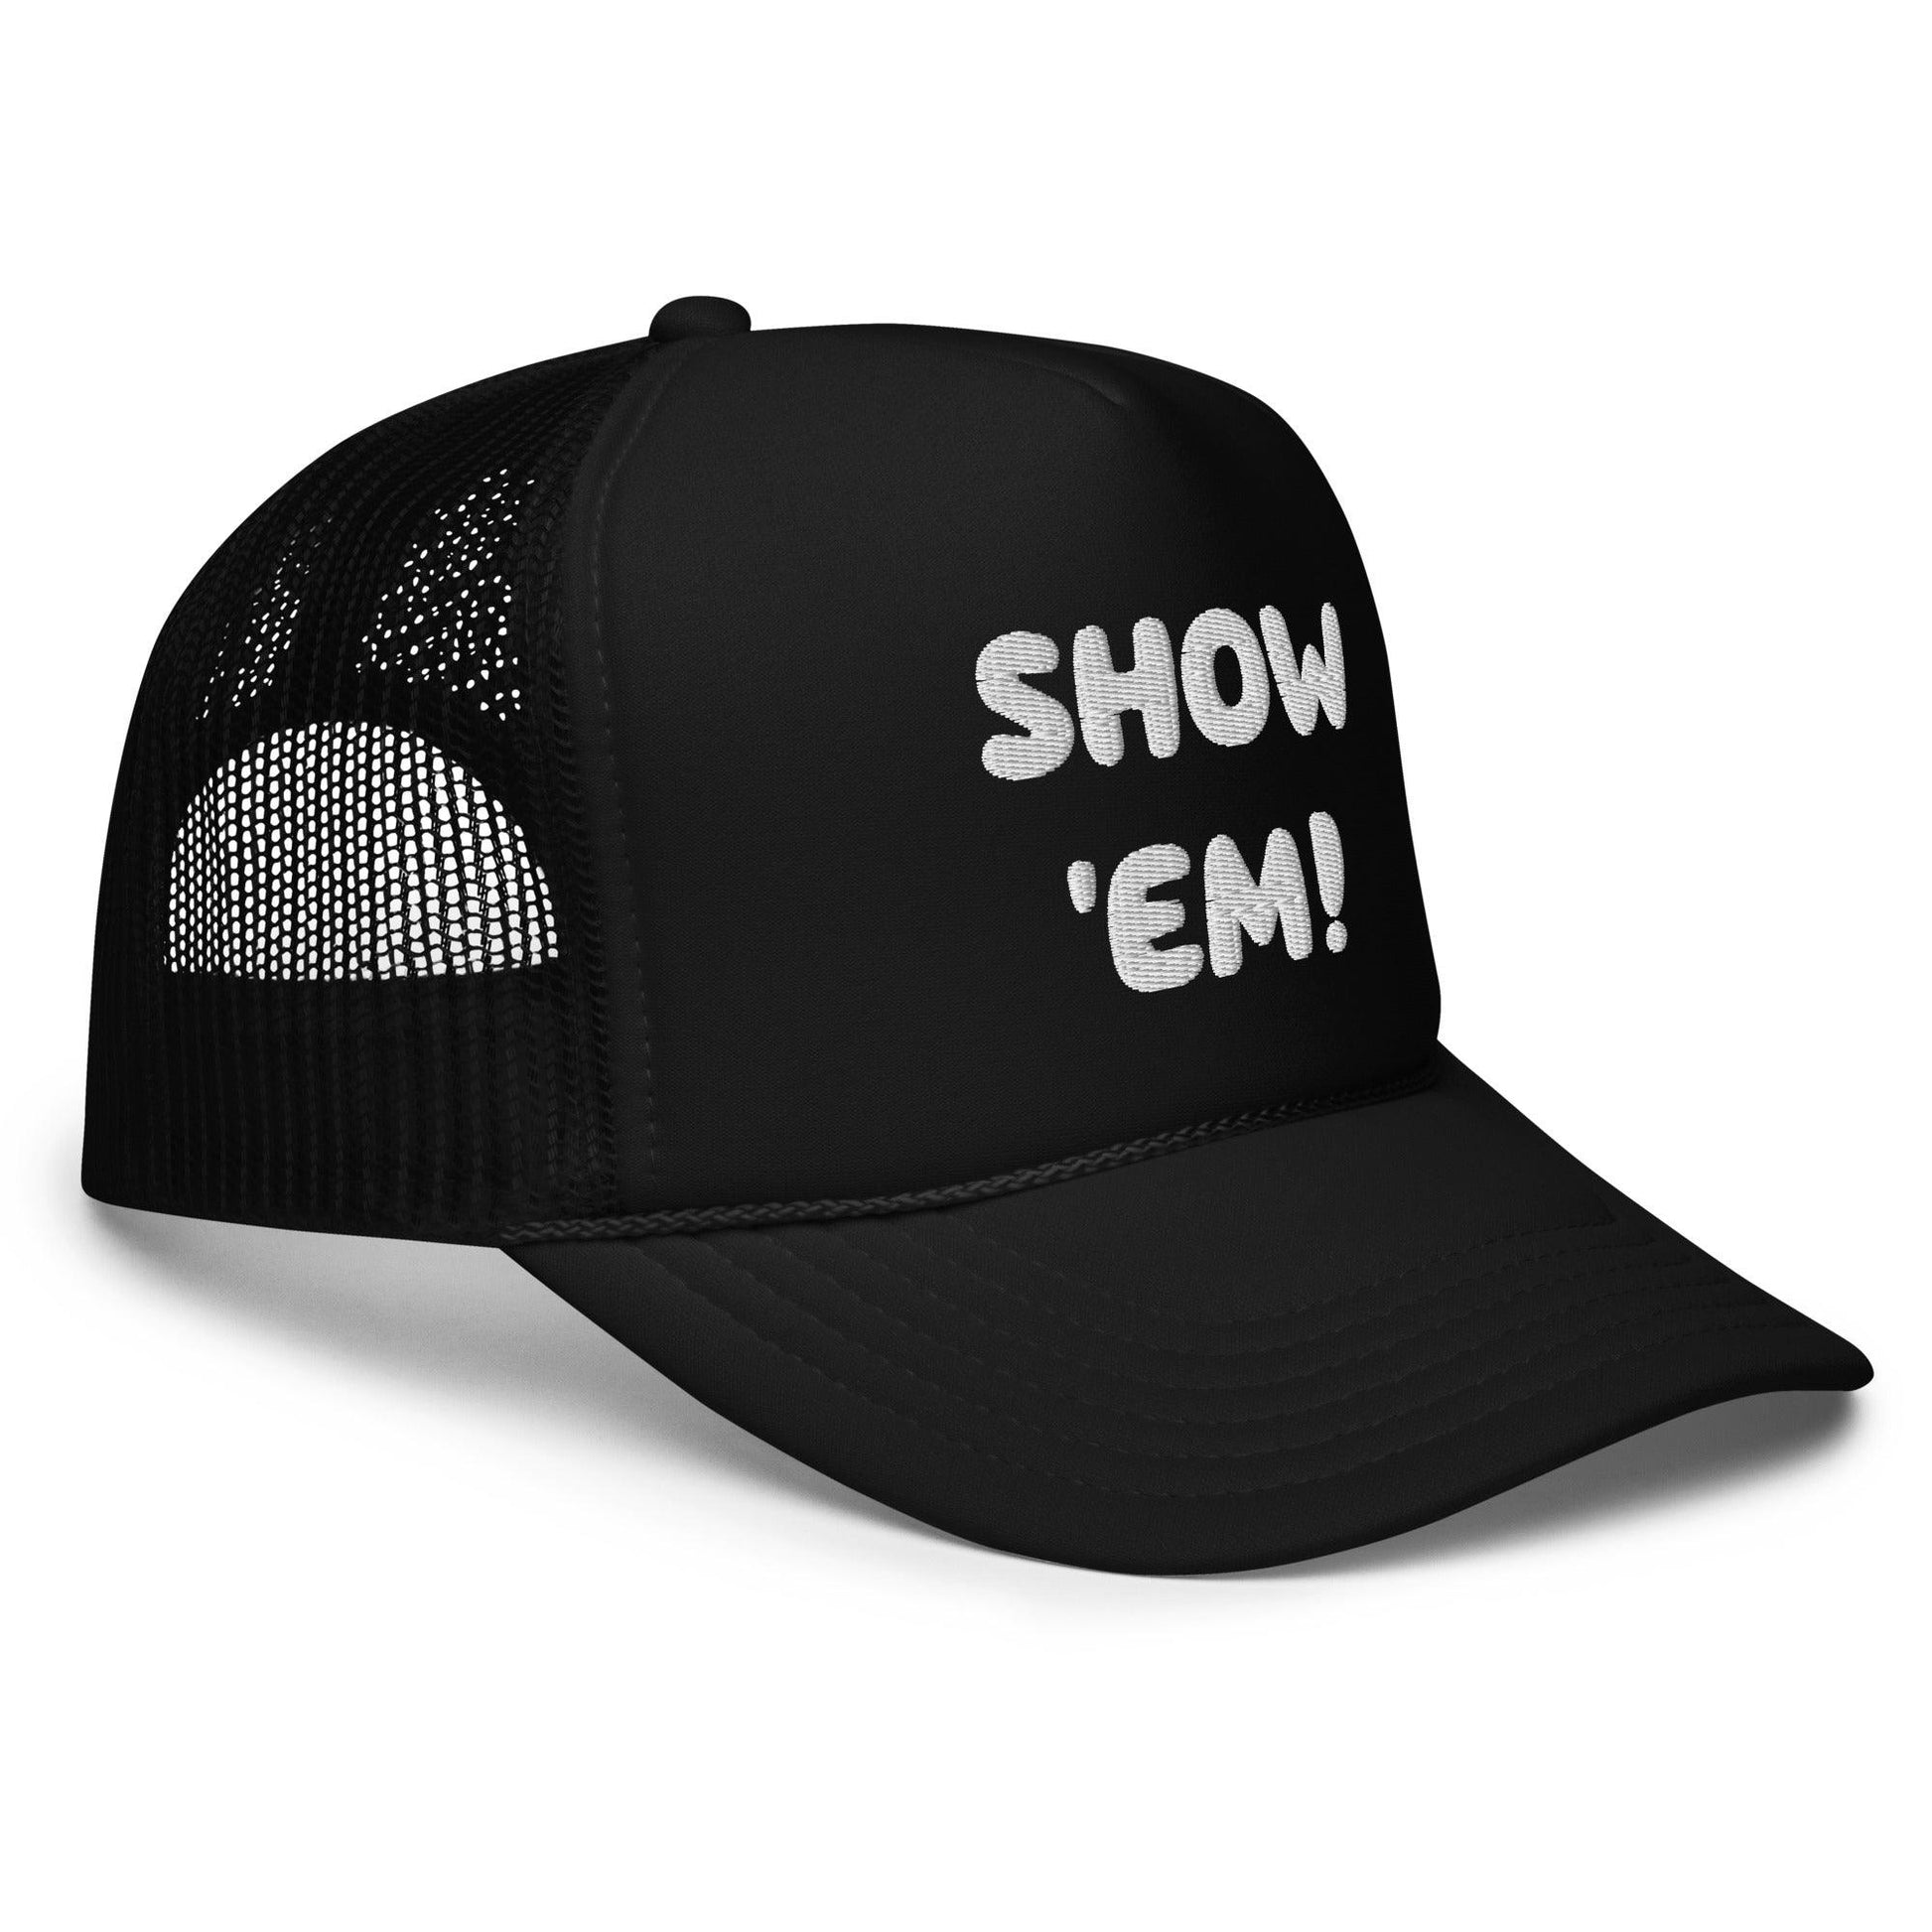 SHOW 'EM! Foam trucker hat - Lizard Vigilante